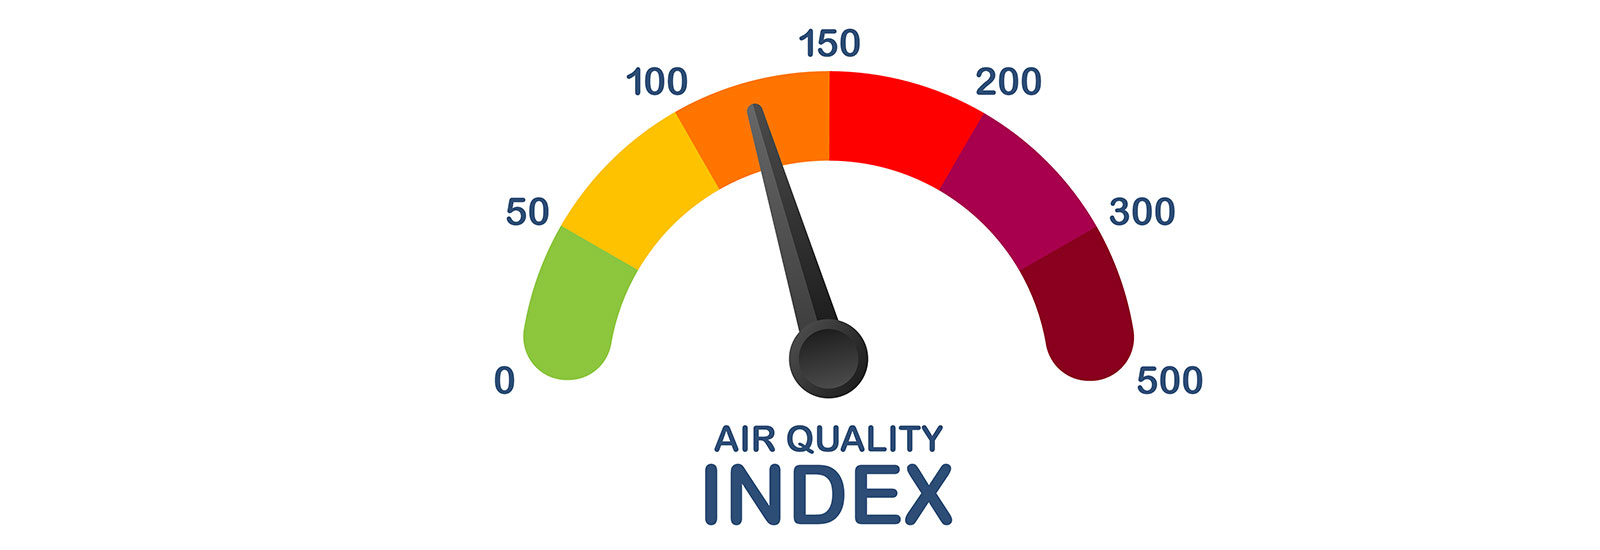 Air quality index